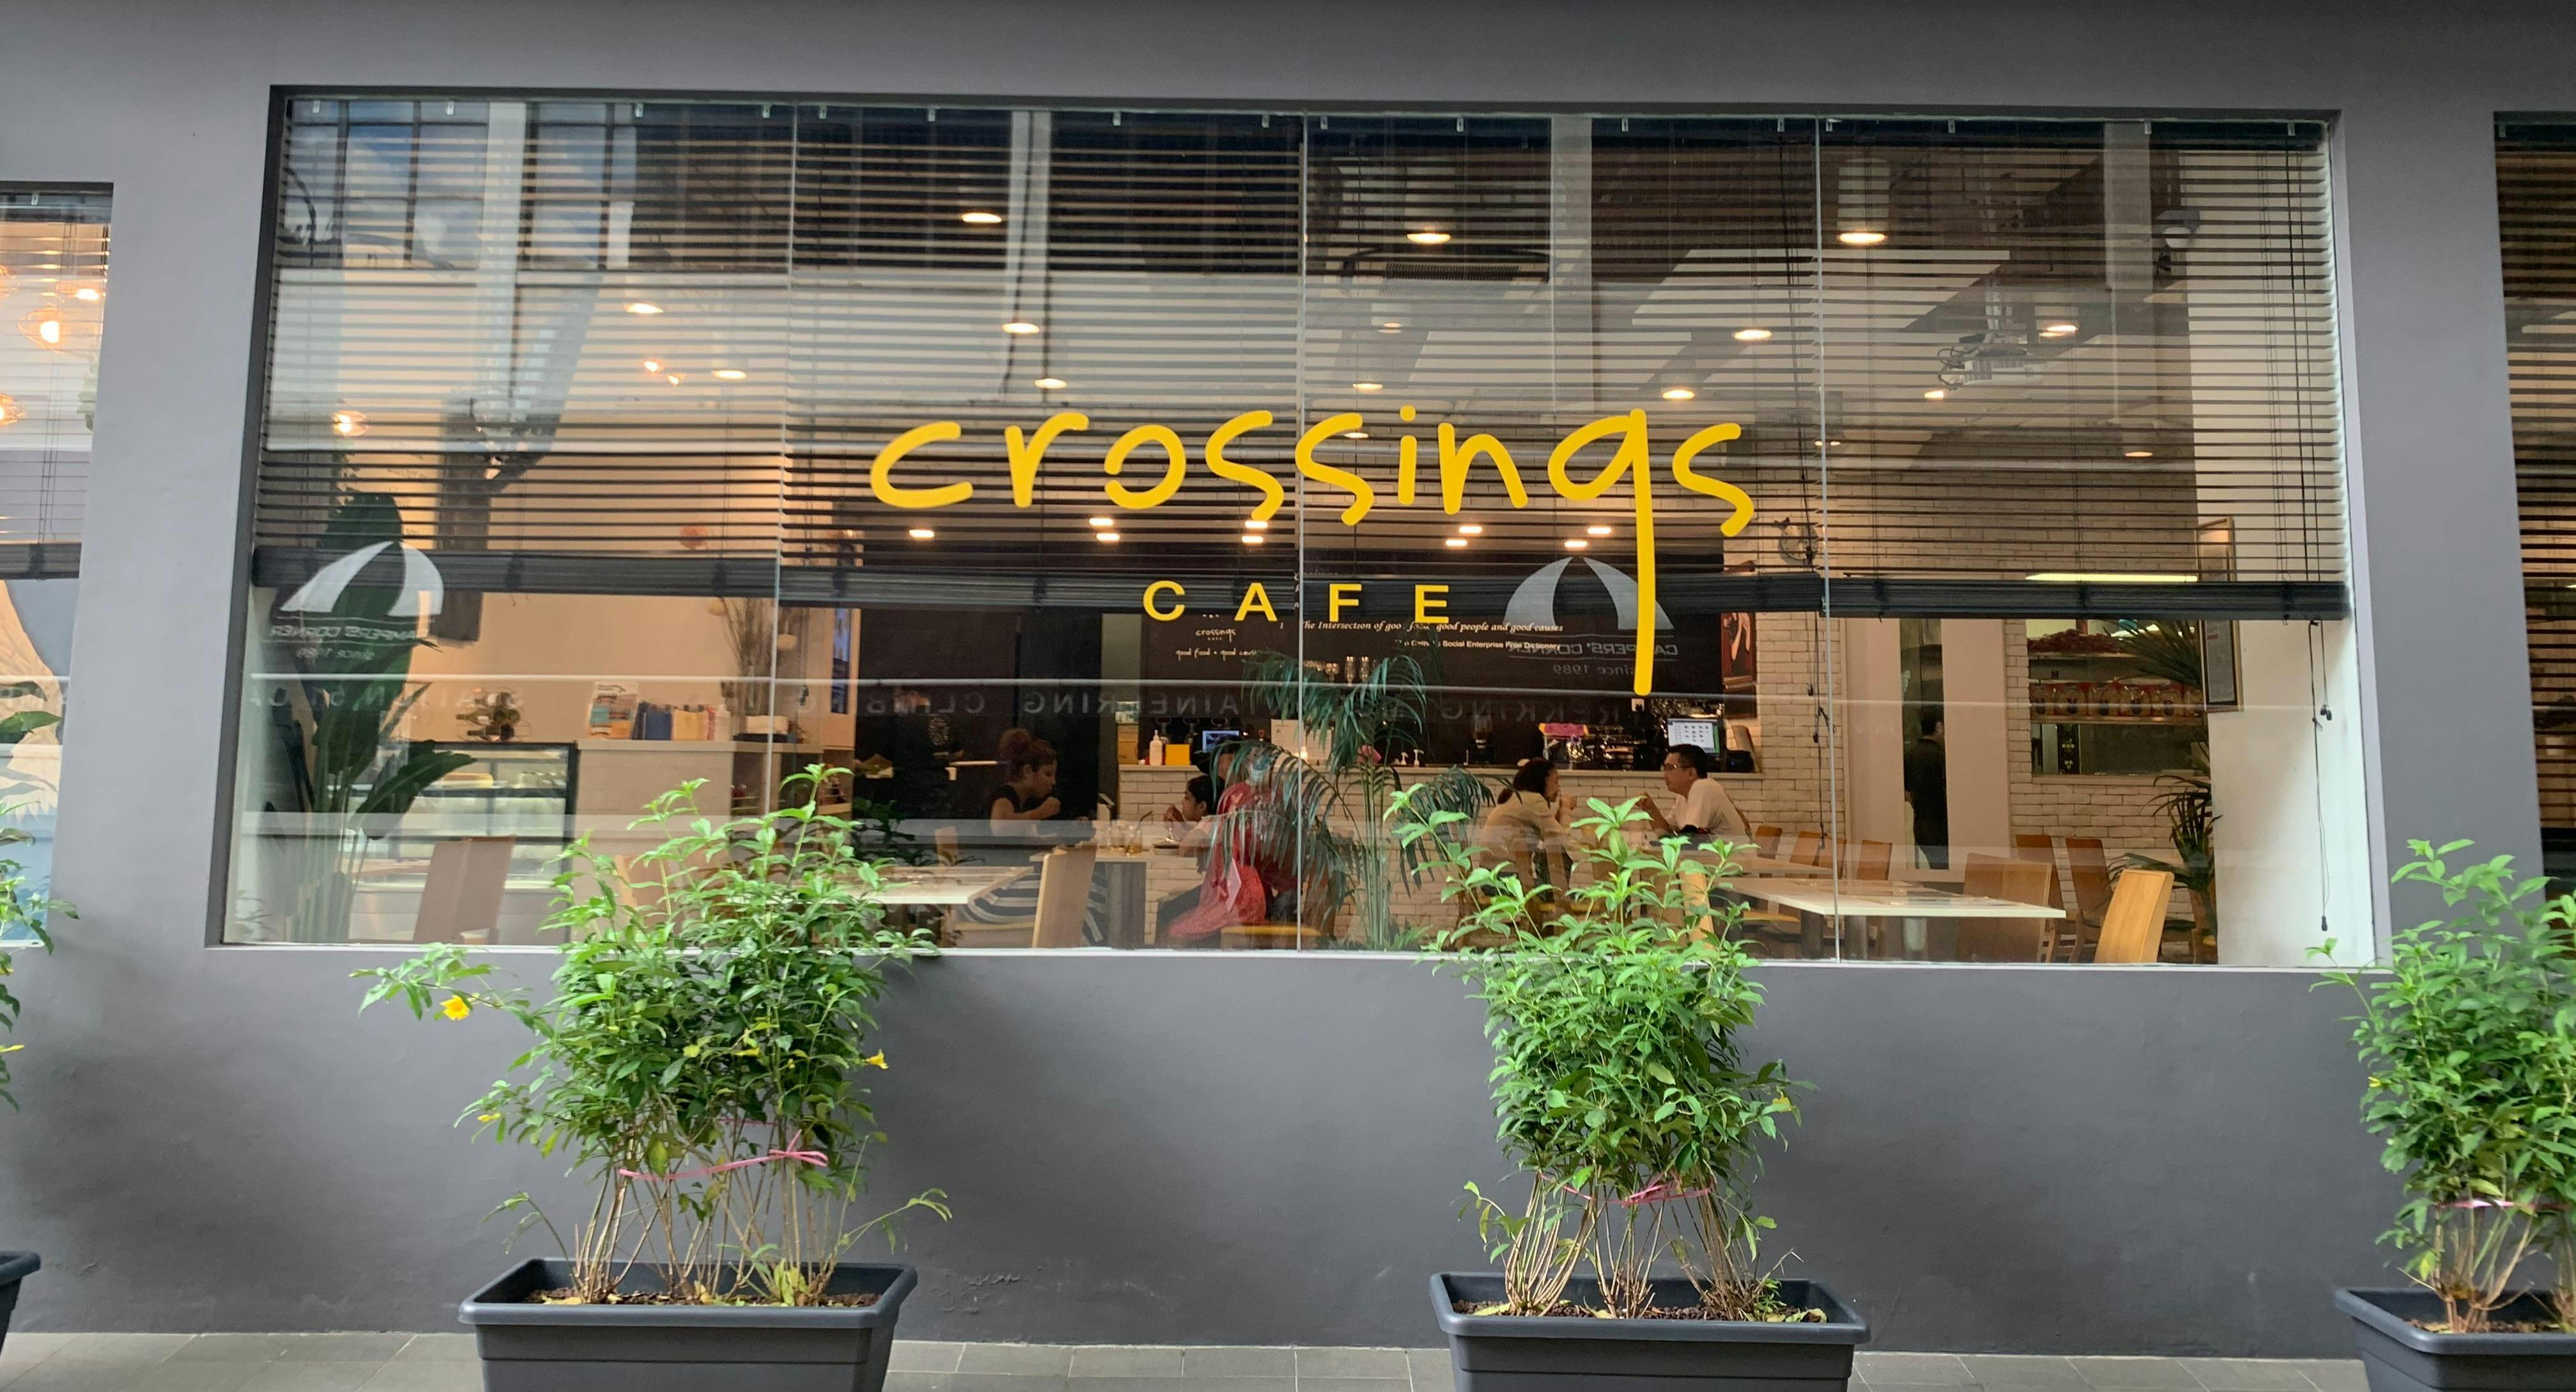 Photo of restaurant Crossings Cafe in Bras Basah, Singapore